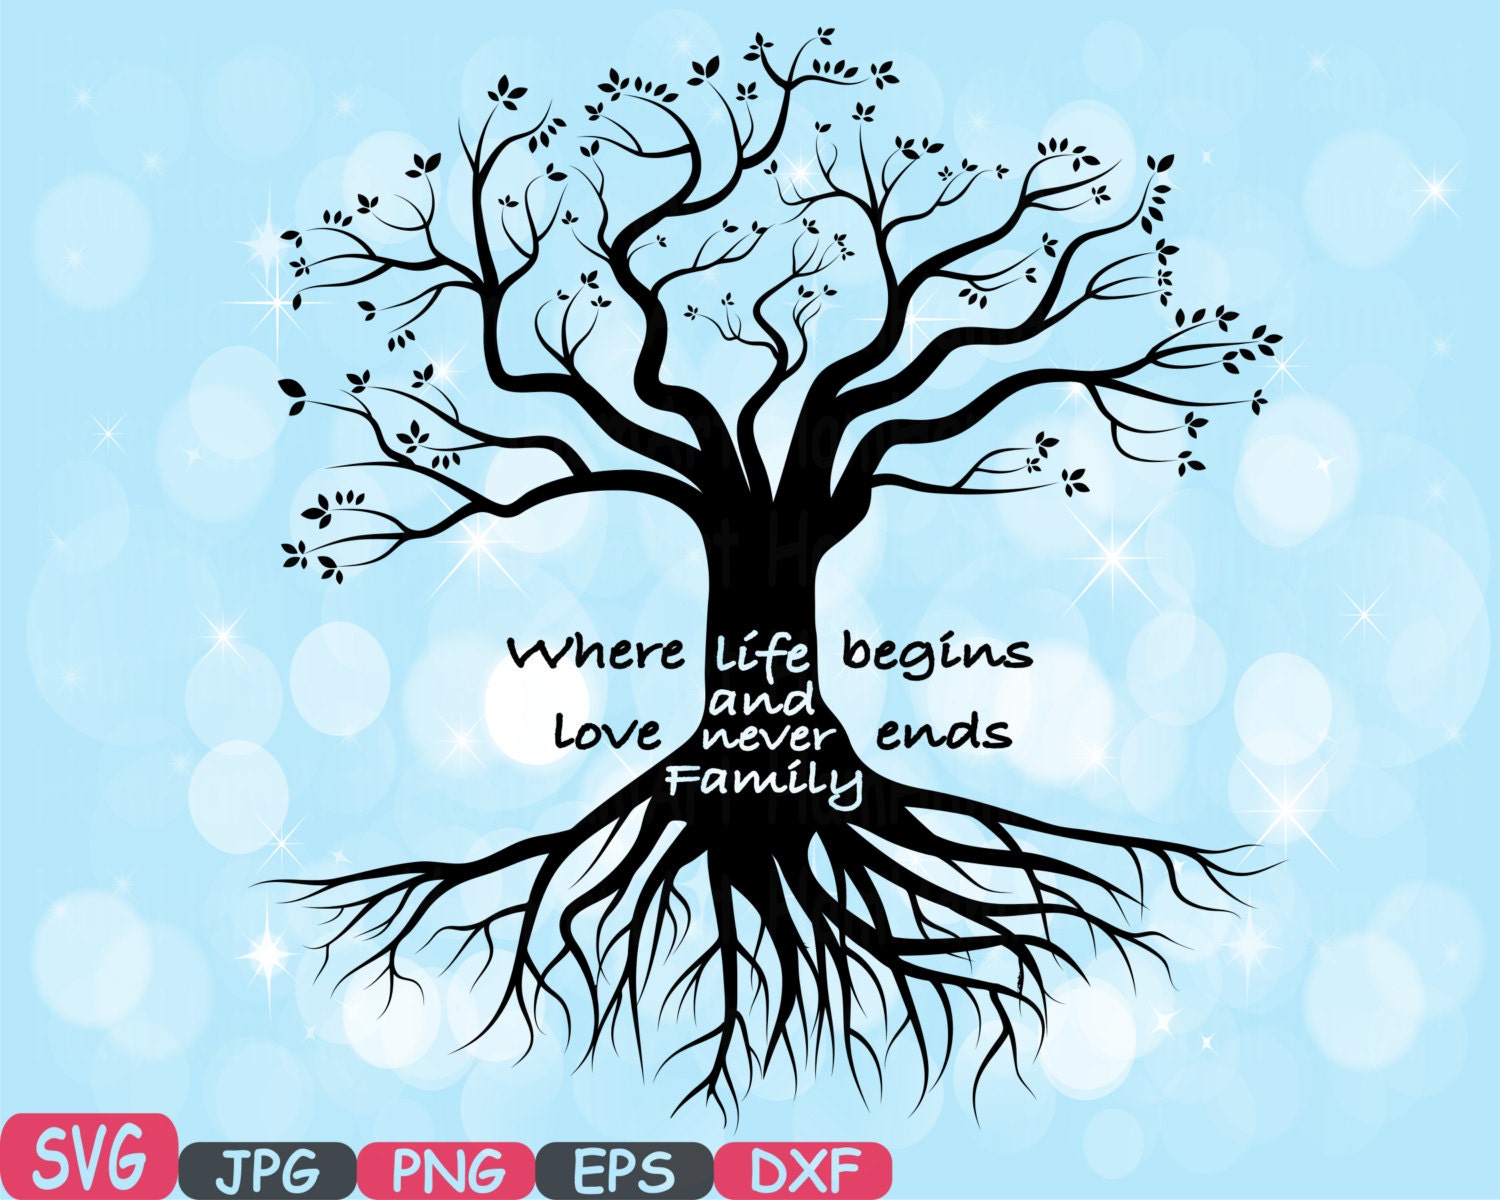 Tree words. Тест слово дерево жизнь. Life of a little Tree ends картинка.